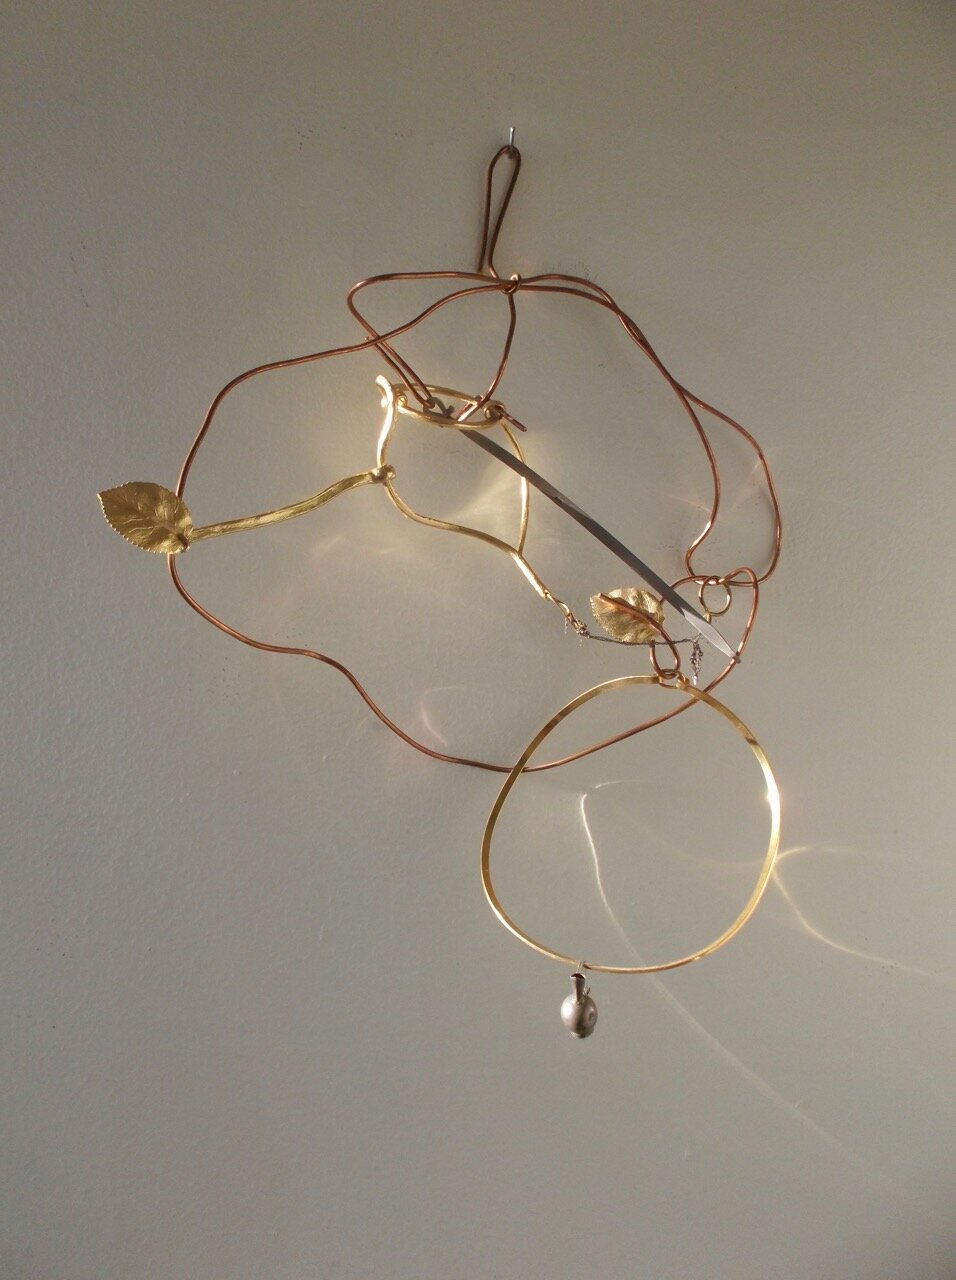  2018   copper wire, jewelry parts 